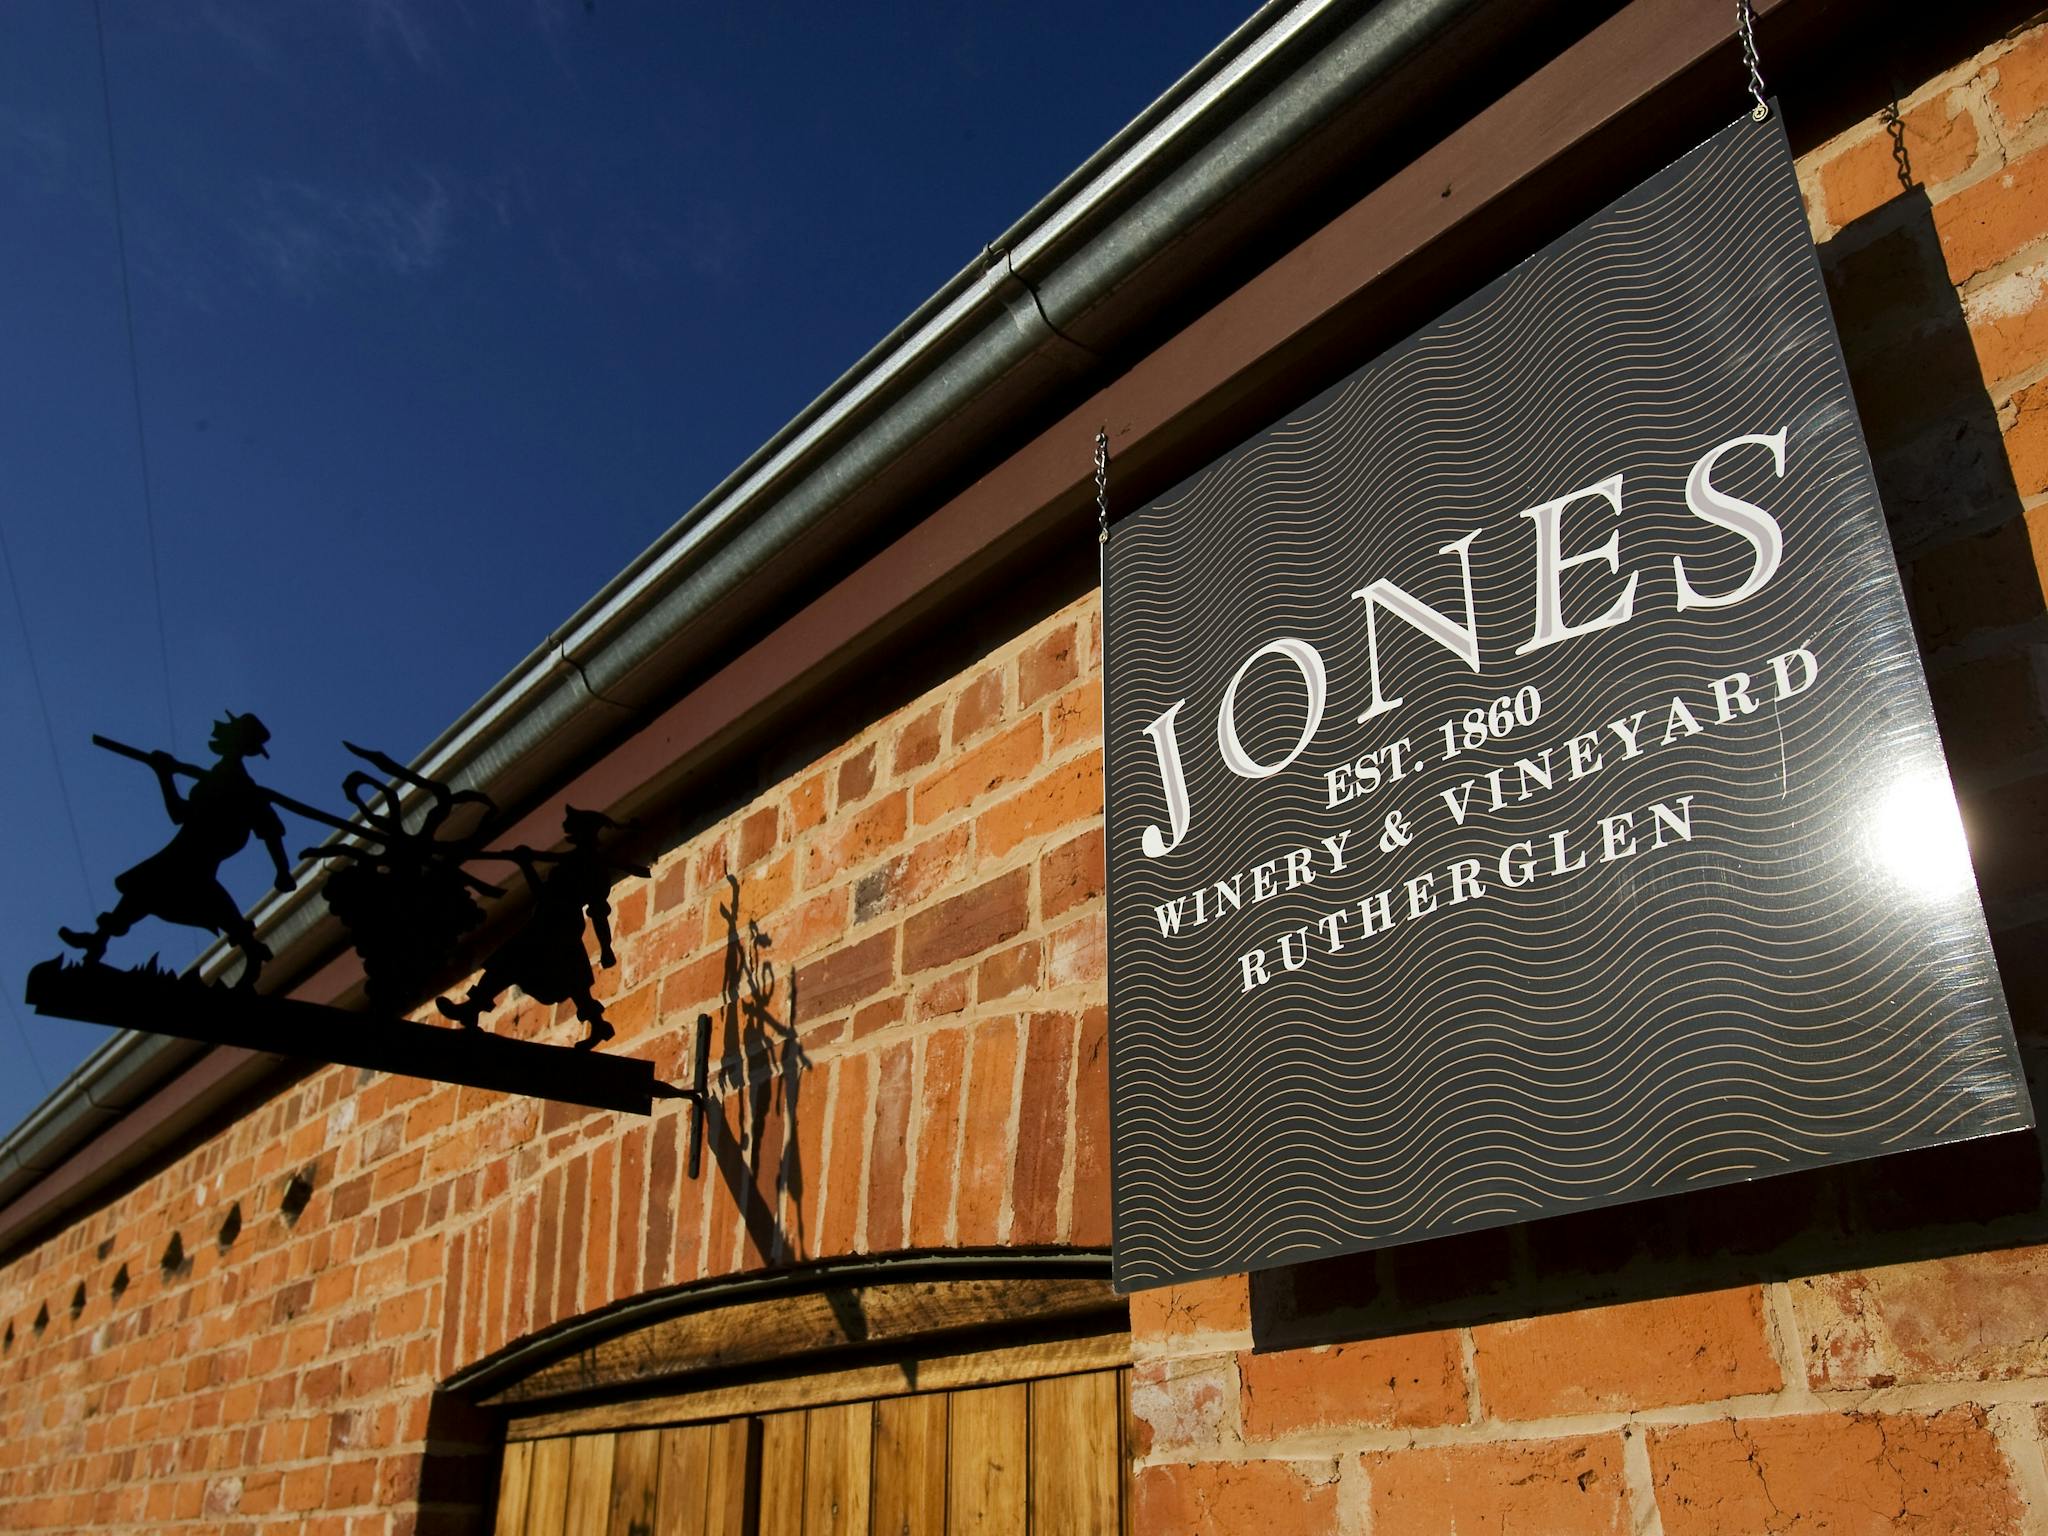 Jones Winery & Vineyards Rutherglen